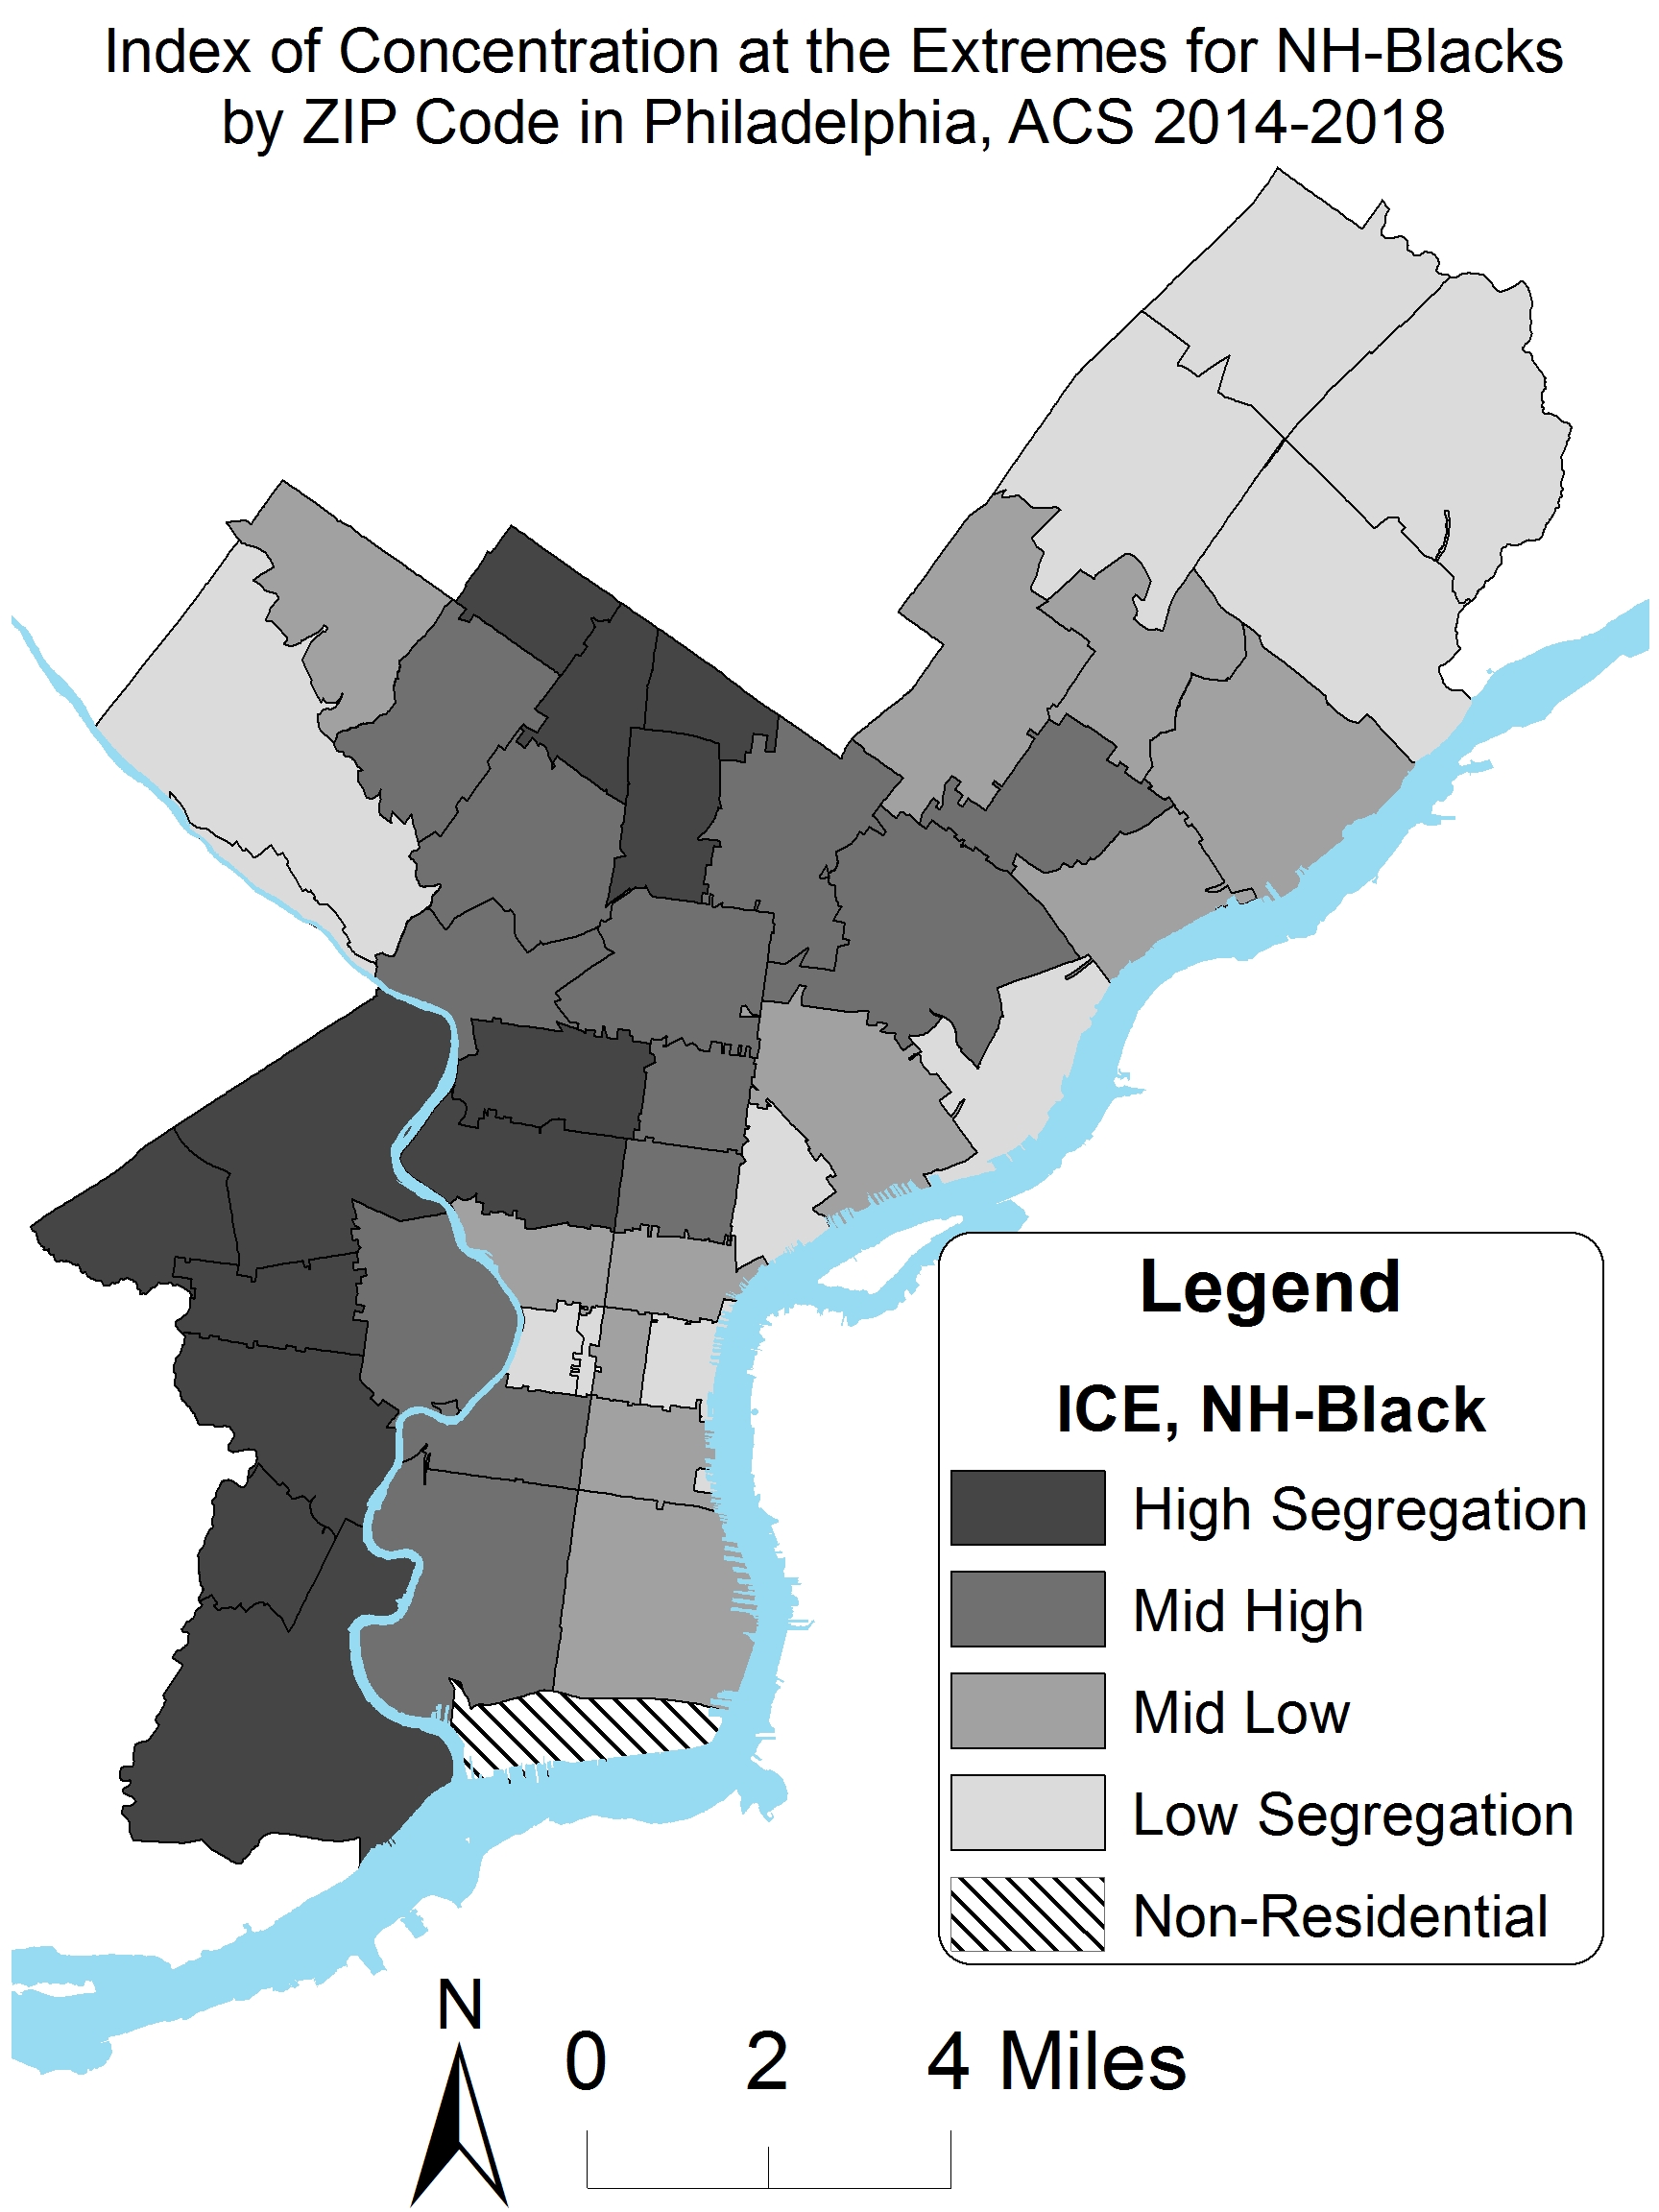 Racial Residential Segregation in Philadelphia